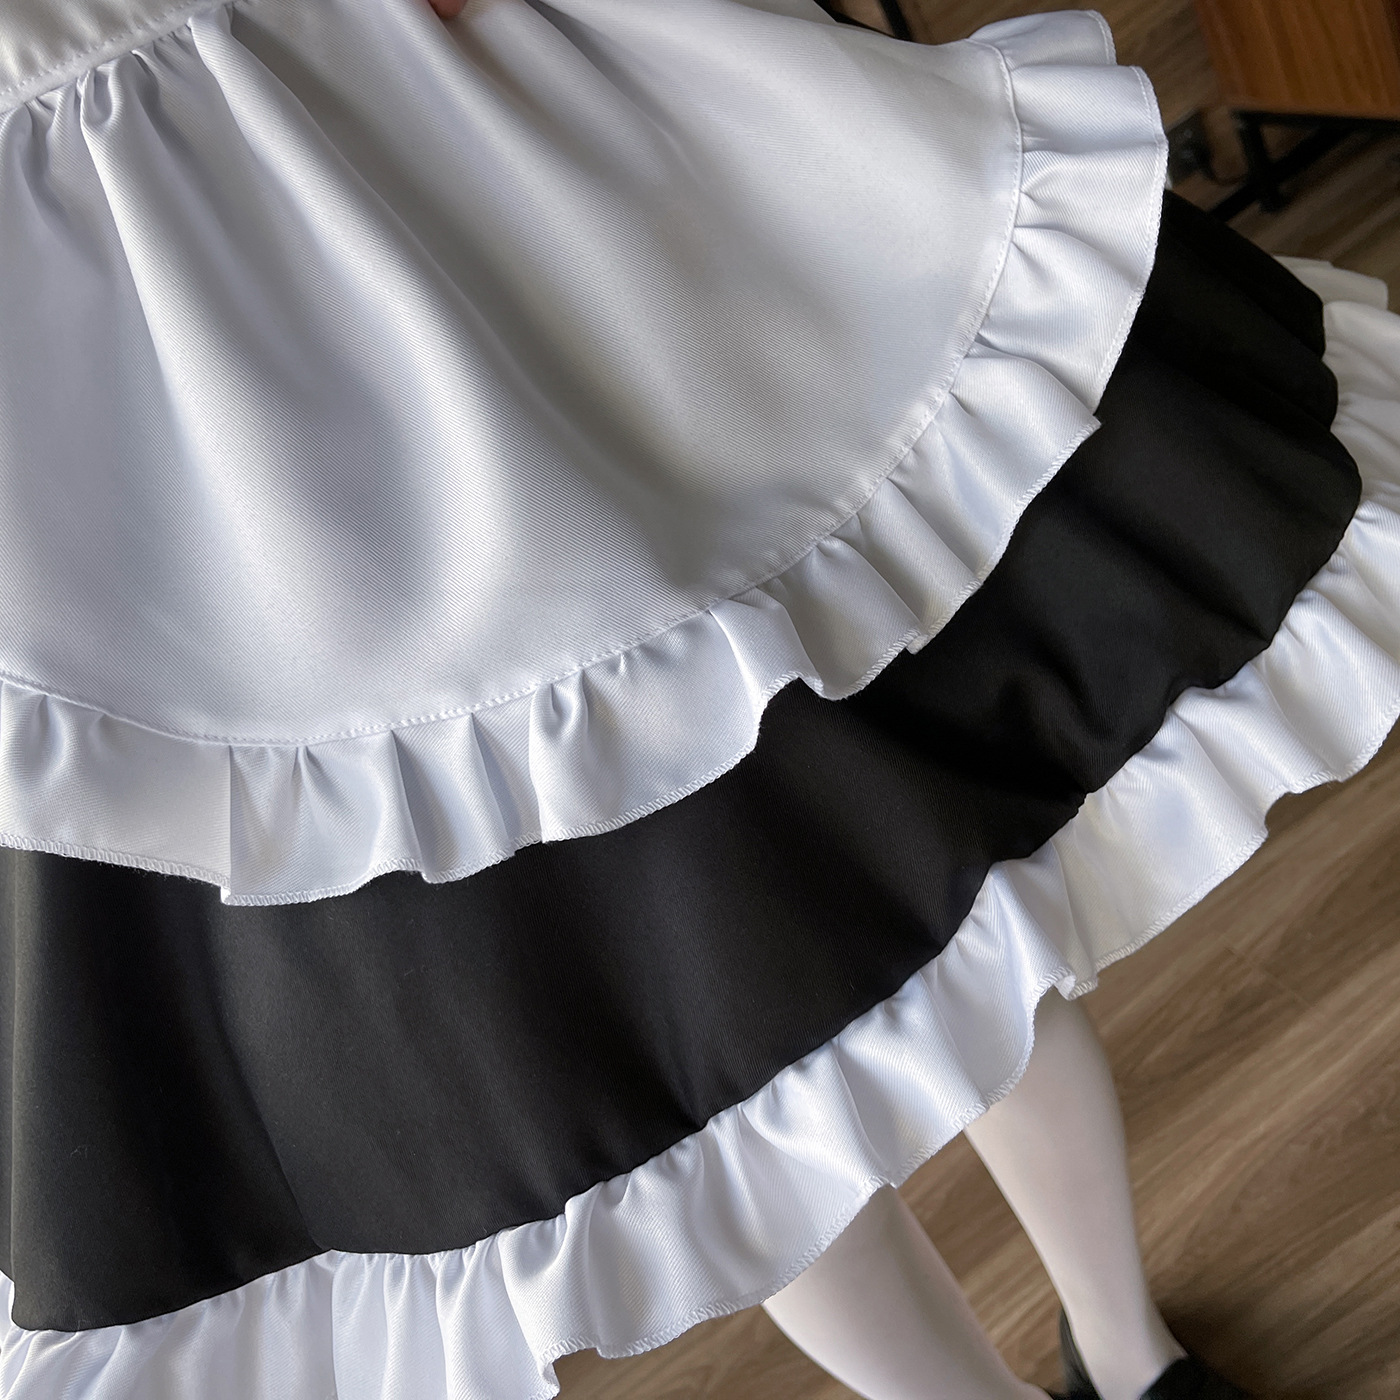 2022 preto bonito lolita empregada doméstica francesa vestido meninas mulher amine cosplay traje empregada doméstica festa trajes palco demônio slayer